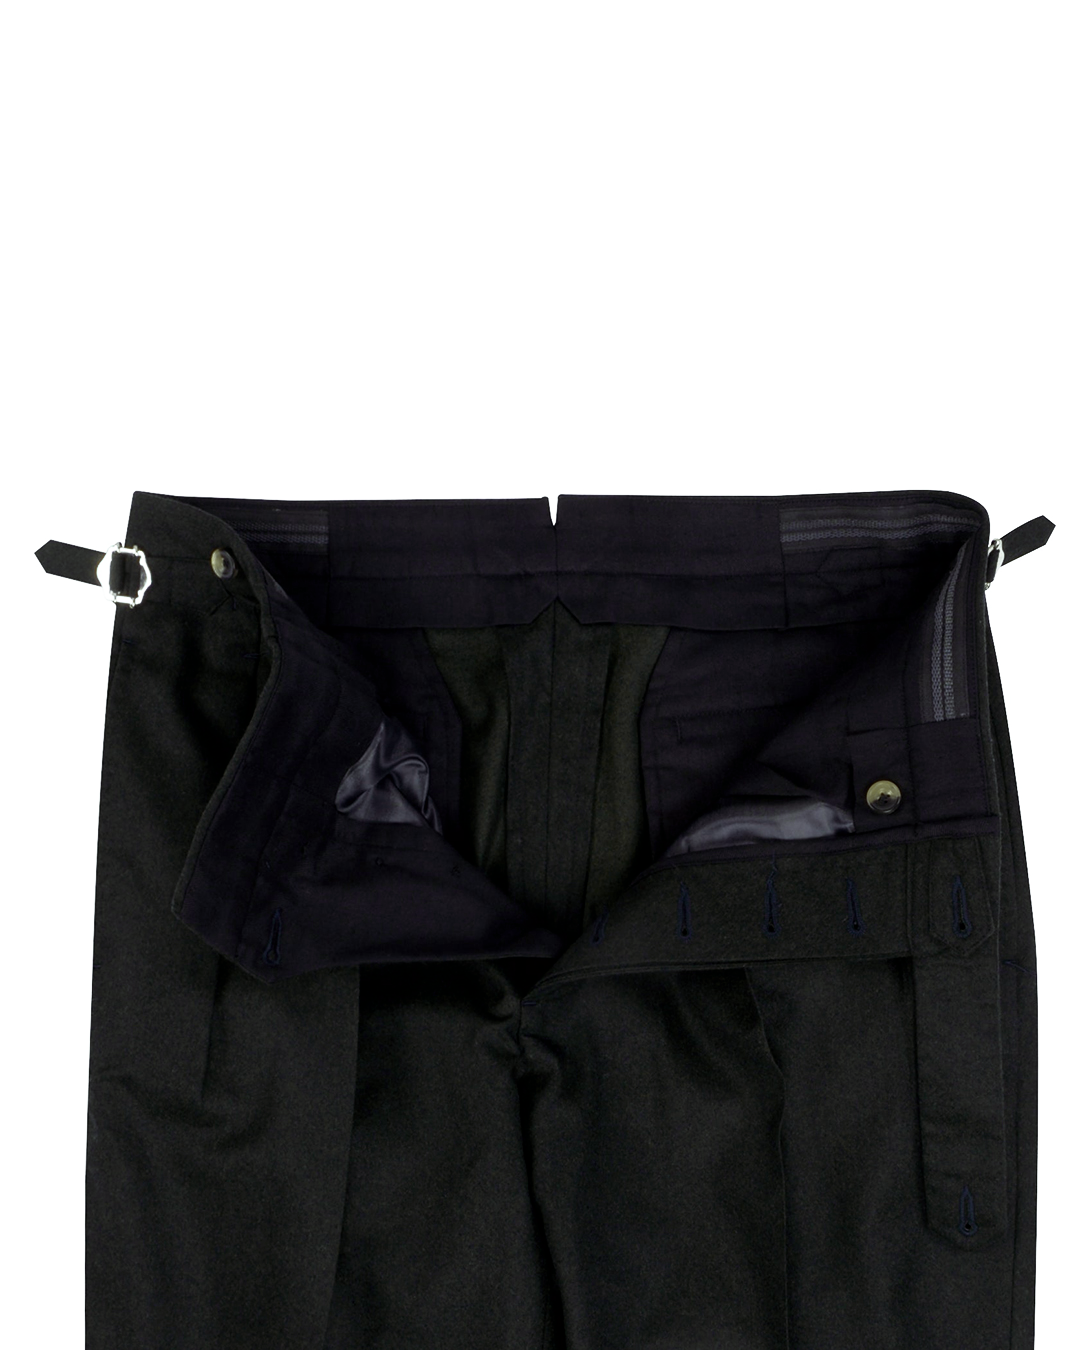 VBC 100% Wool: Greenish Black Flannel High Waisted Pant